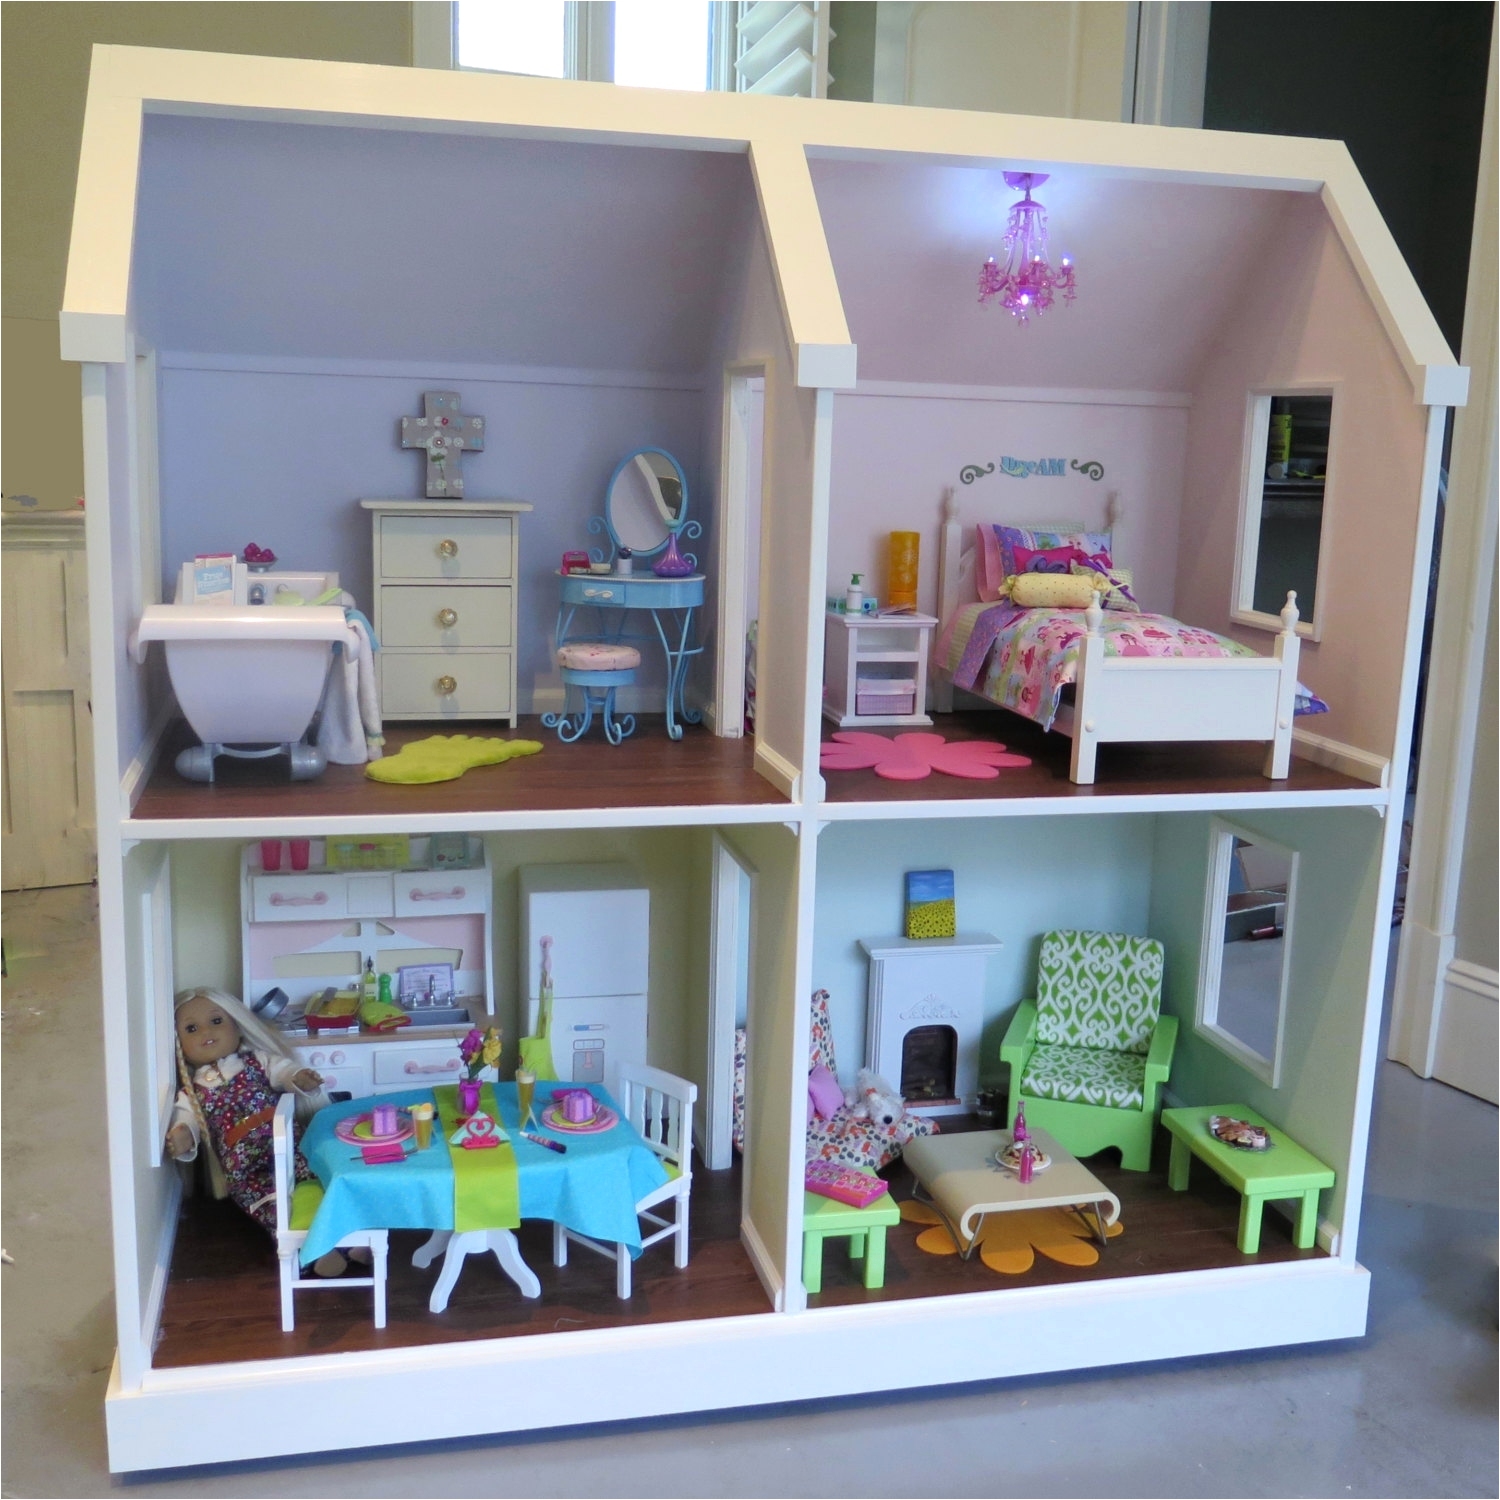 luxury american girl doll house floor plans home inspiration